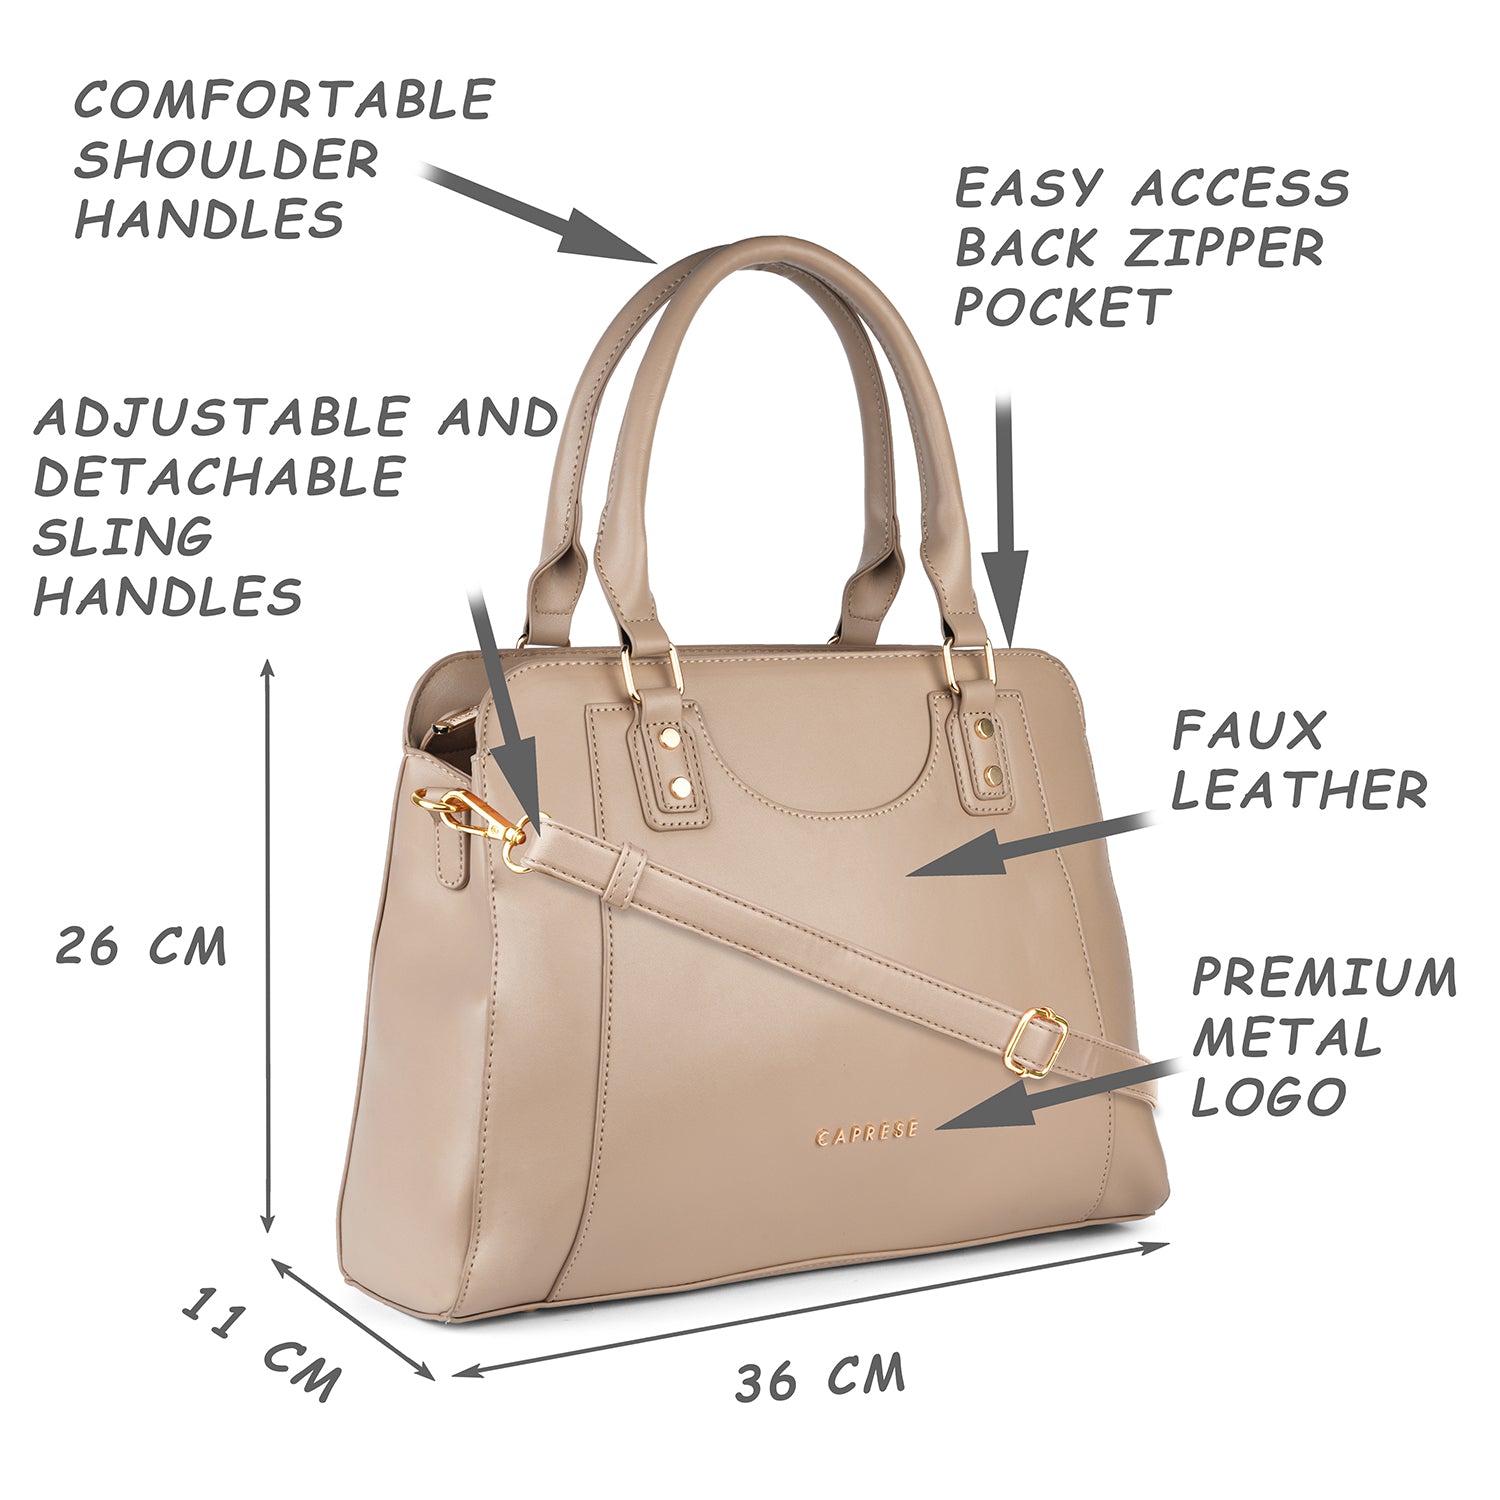 Buy Caprese Handbags Online In India At Best Price Offers | Tata CLiQ